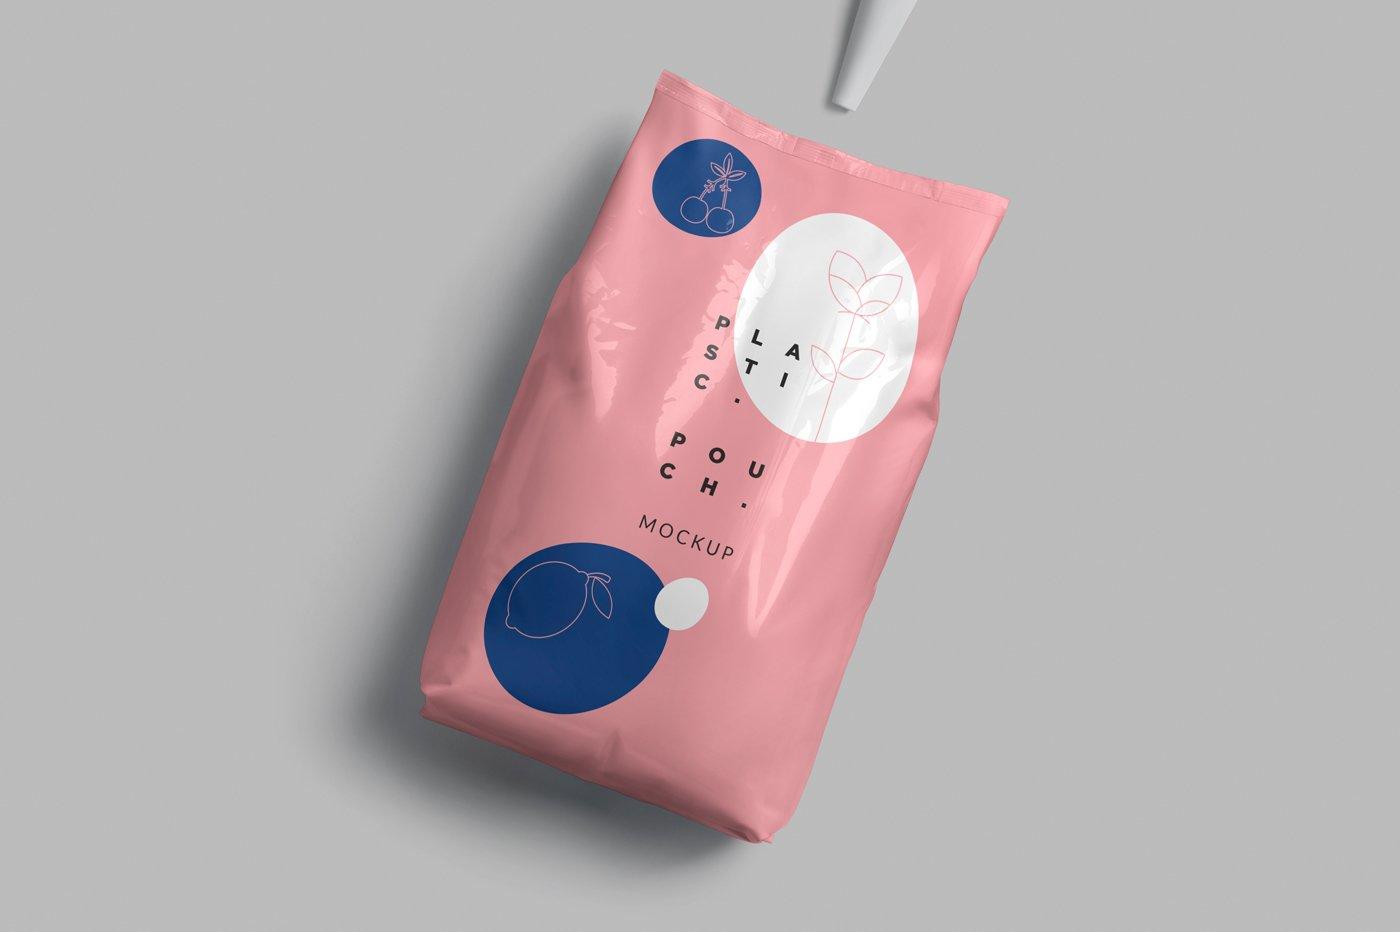 大米袋食品袋咖啡袋塑料包装袋样机贴图ps素材资源下载 Plastic Packaging Pouch Mockups